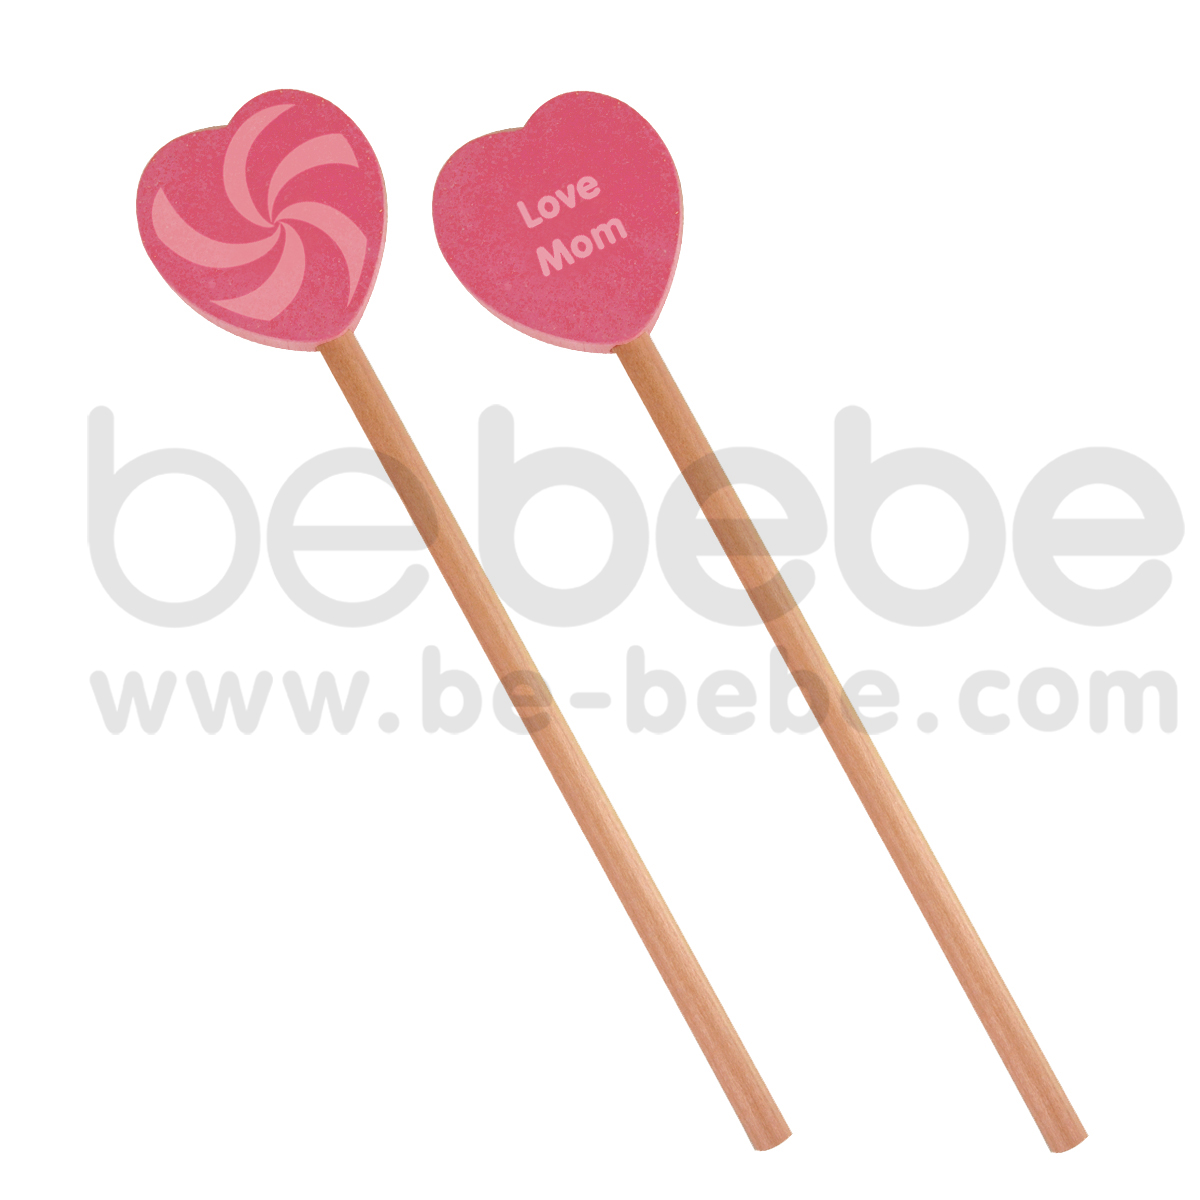 bebebe : Pencil-L-Hearts-Love Mom/Pink